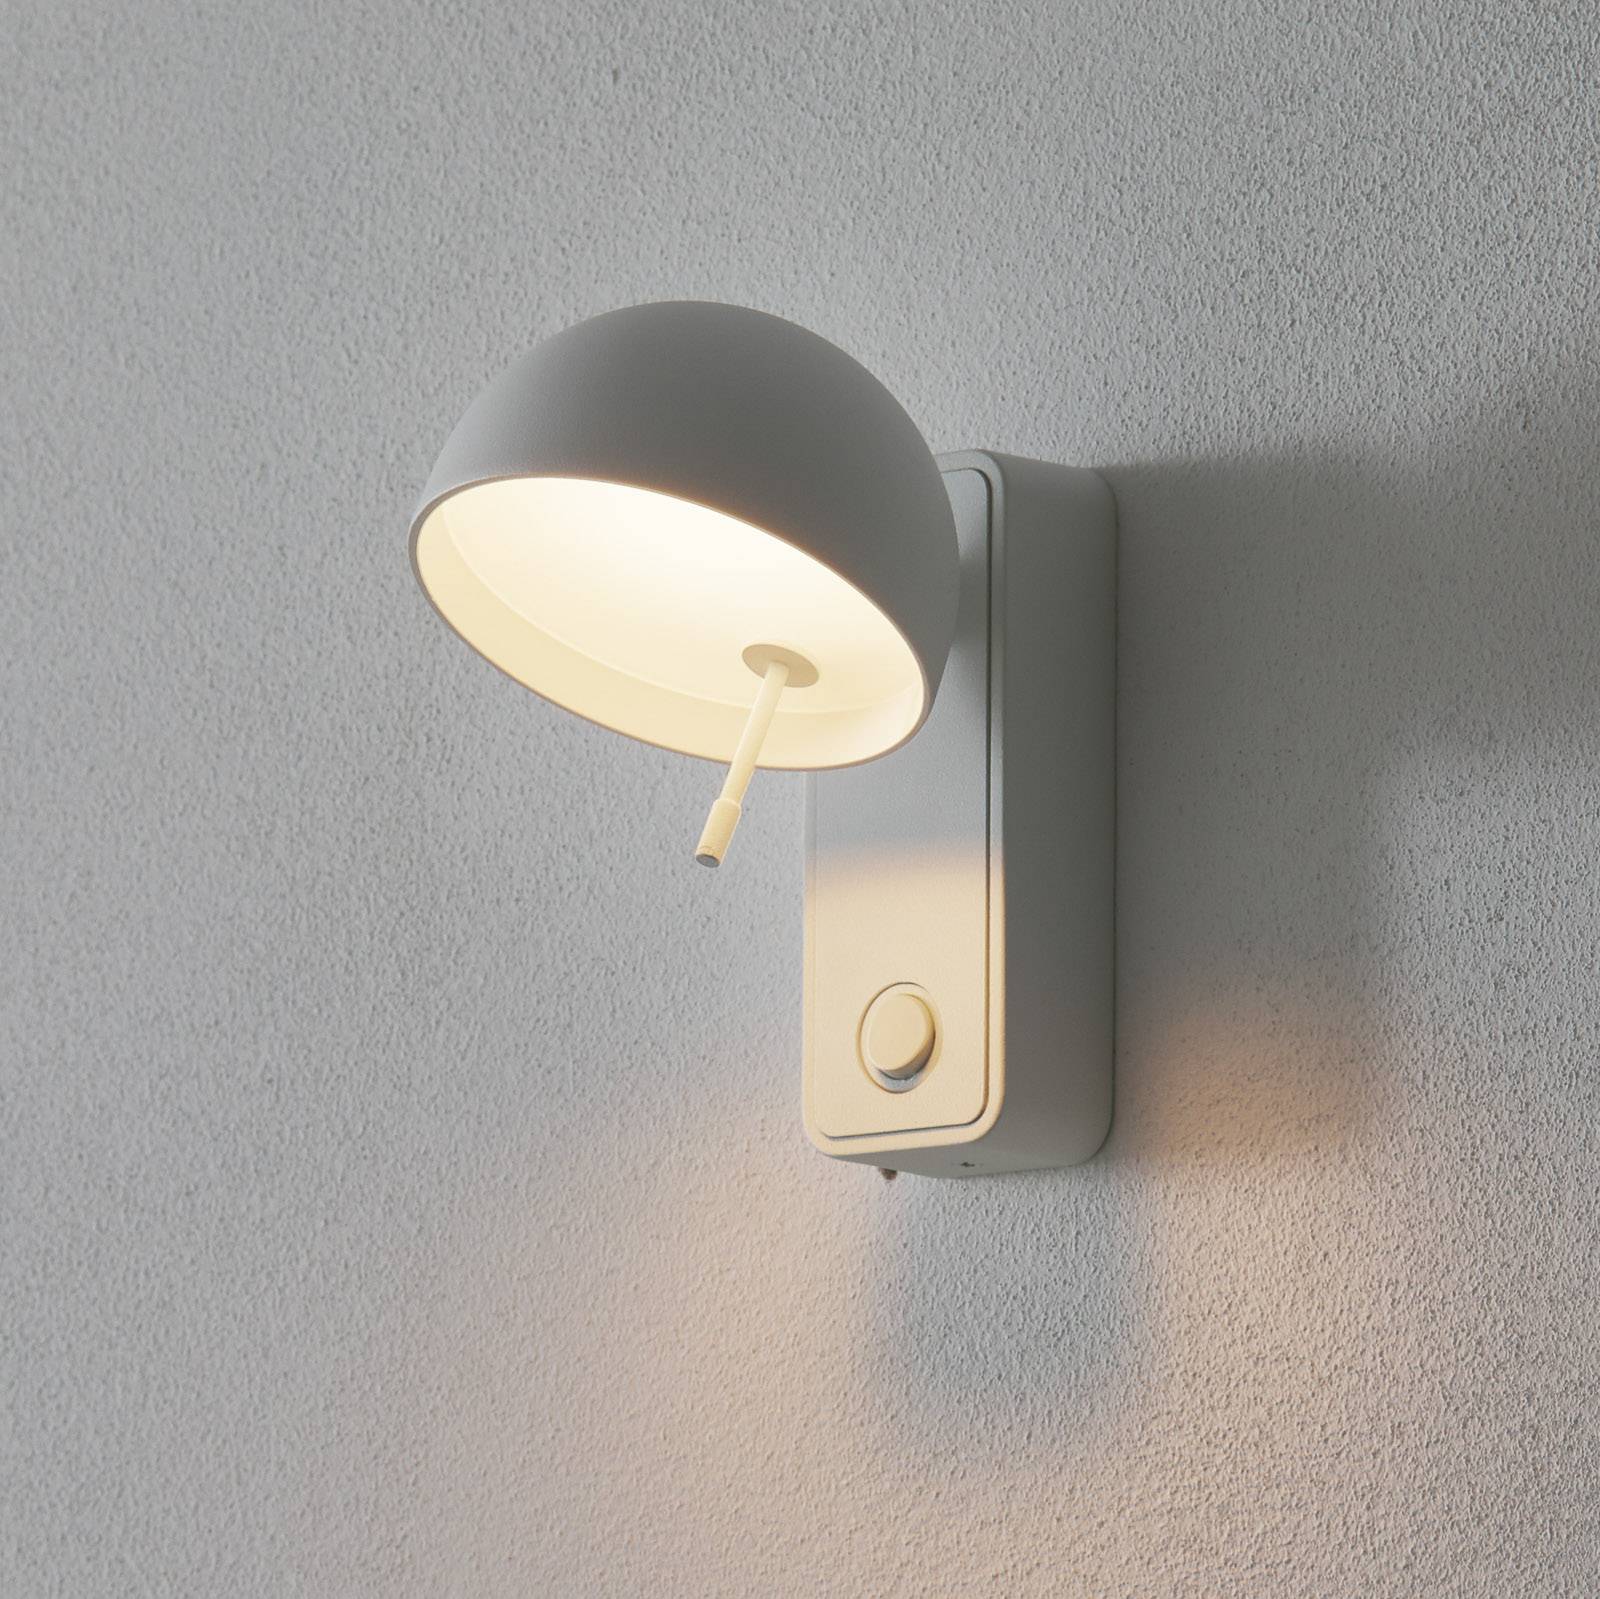 Bover Beddy A/01 LED-Wandlampe drehbar weiß/weiß von Bover